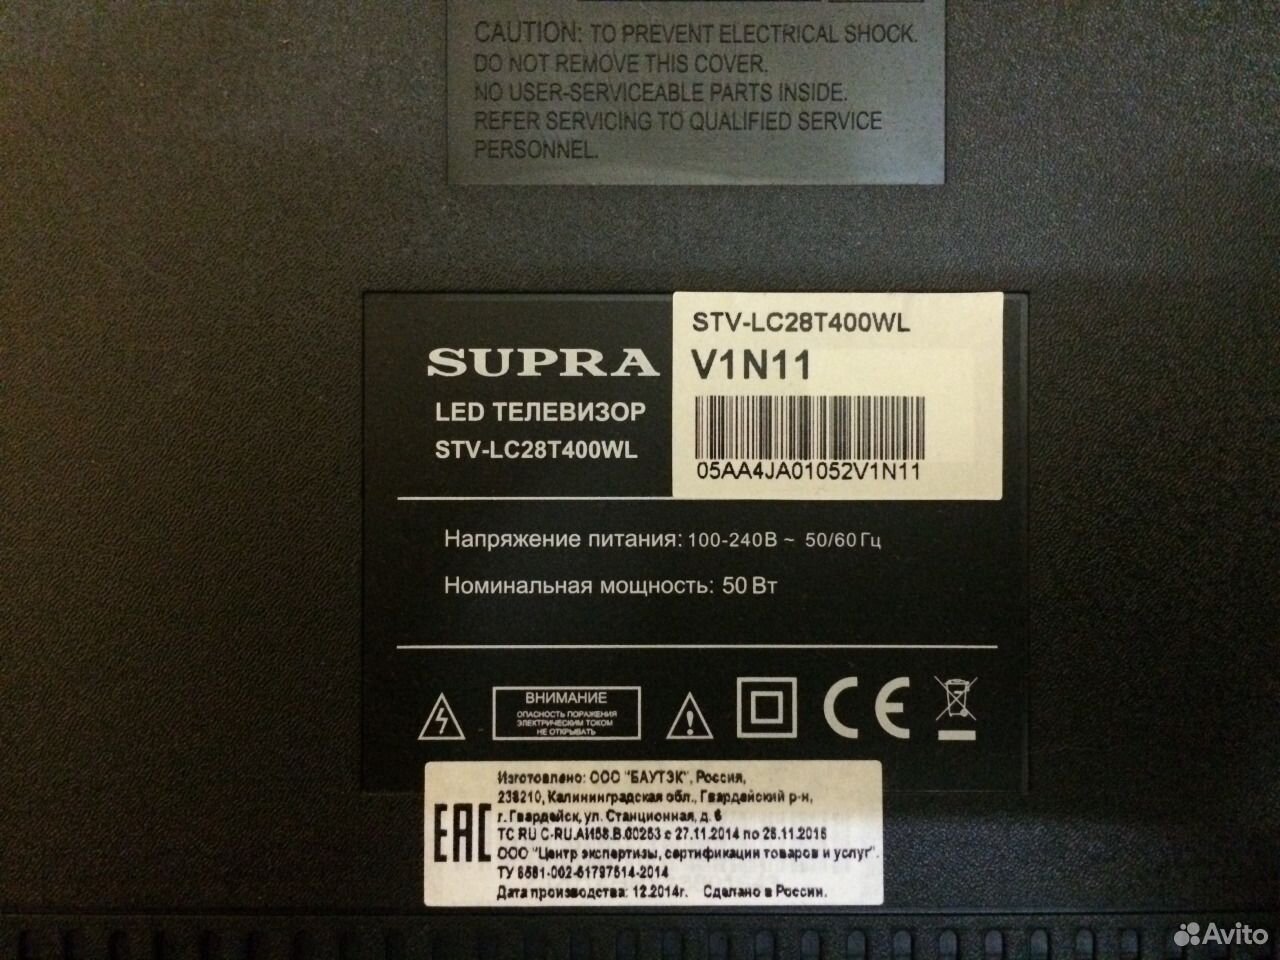 Код телевизора супра. Коды телевизора Supra. Телевизор Supra STV-lc40 2007 года выпуска. Телевизор Supra STV-lc2622wd. Телевизор Supra STV-lc32lt0020w.